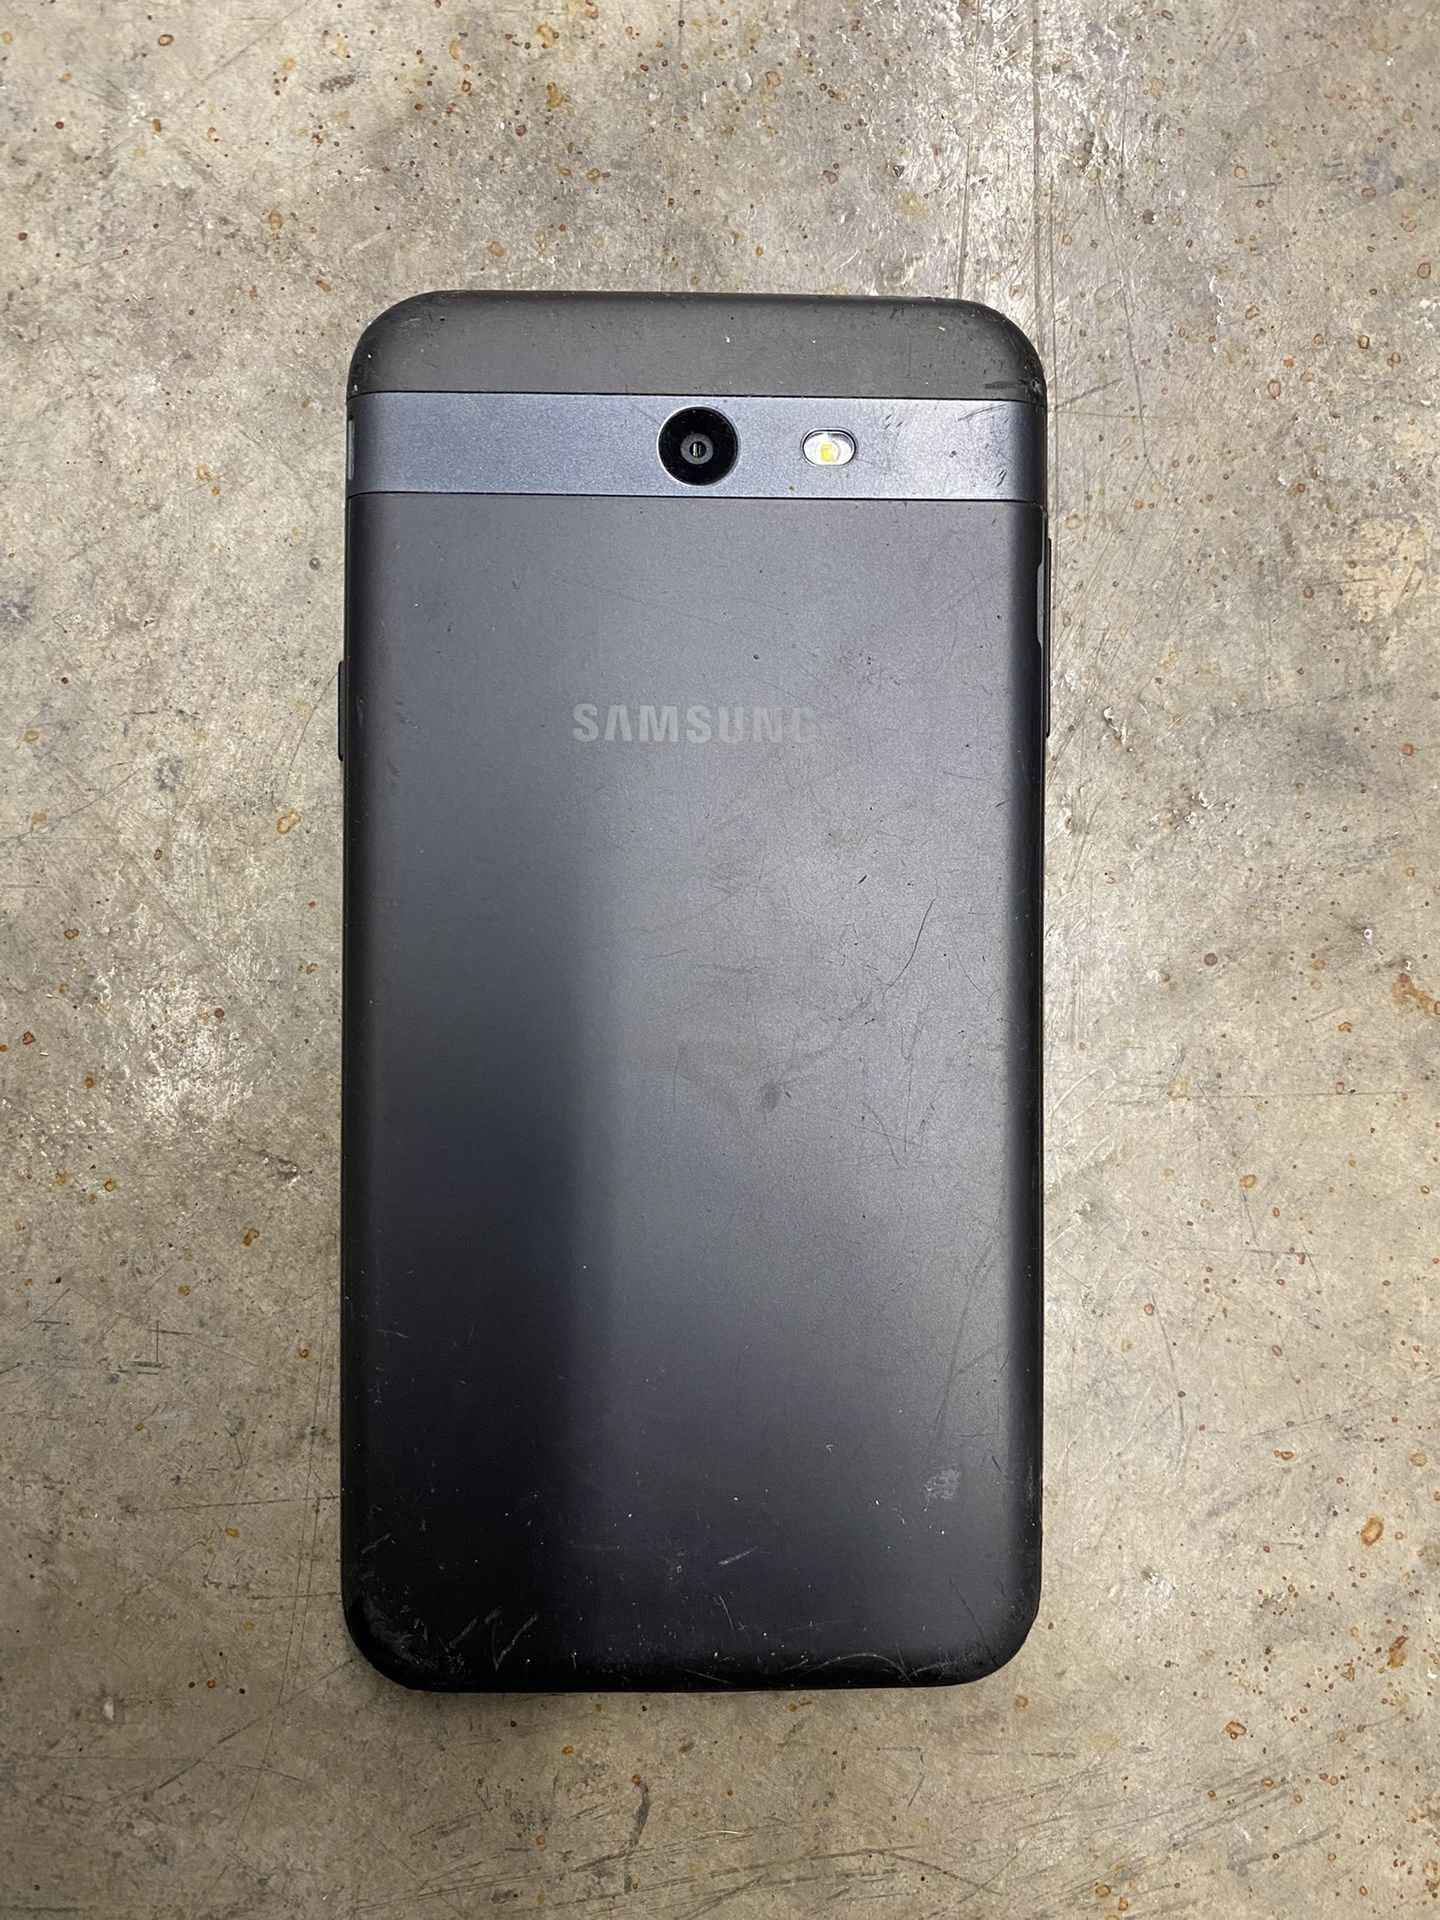 Samsung 4G Phone